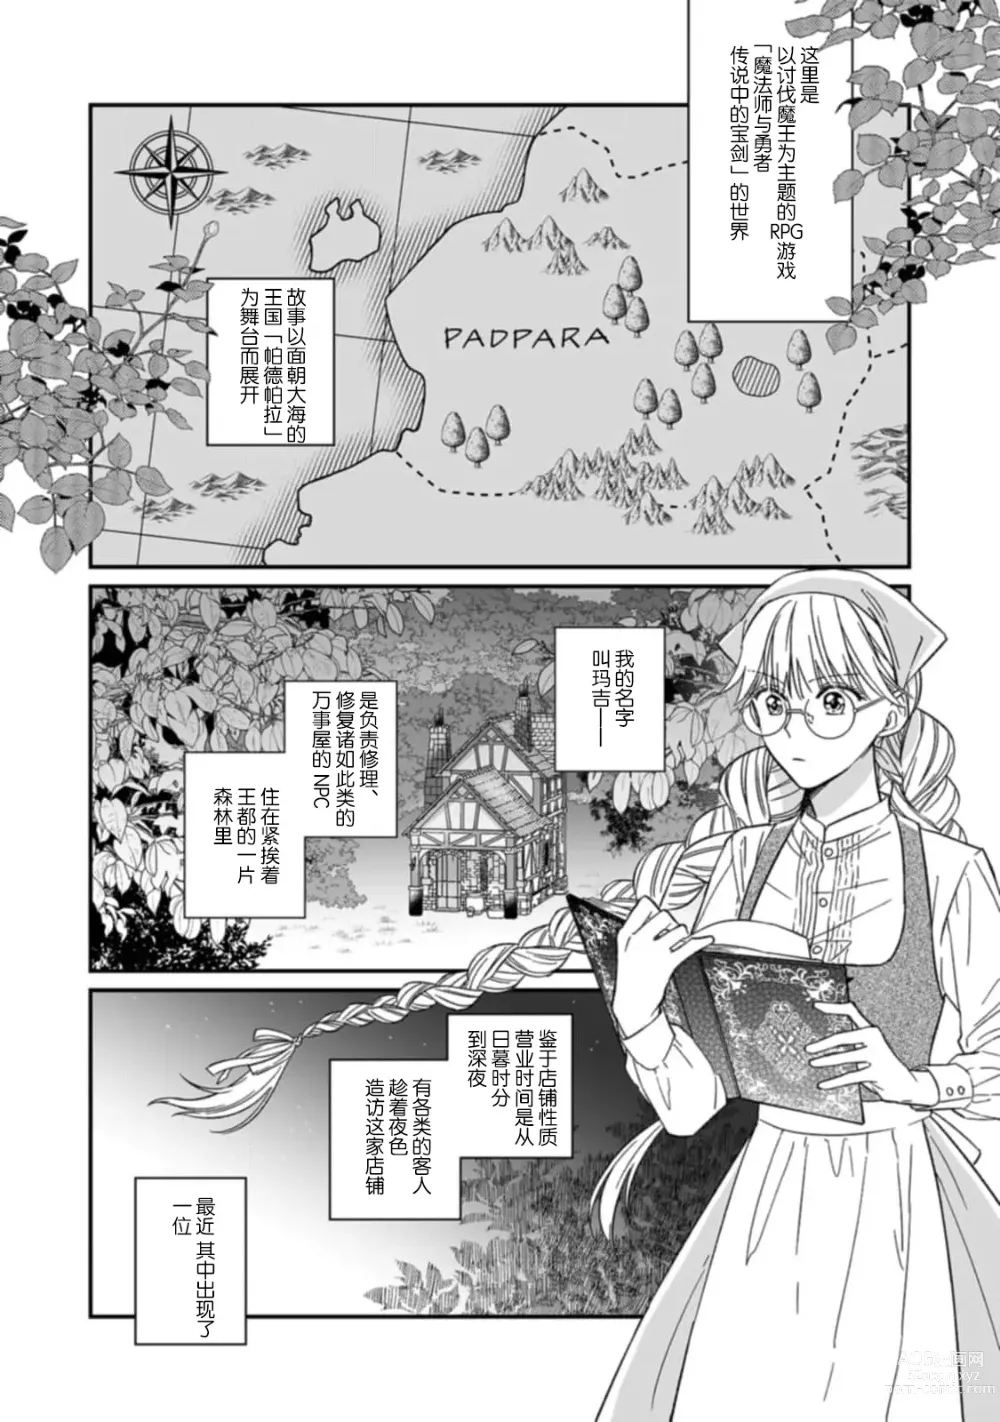 Page 6 of manga 快要被来自异世界的魔王大人攻略了! 1-5 end